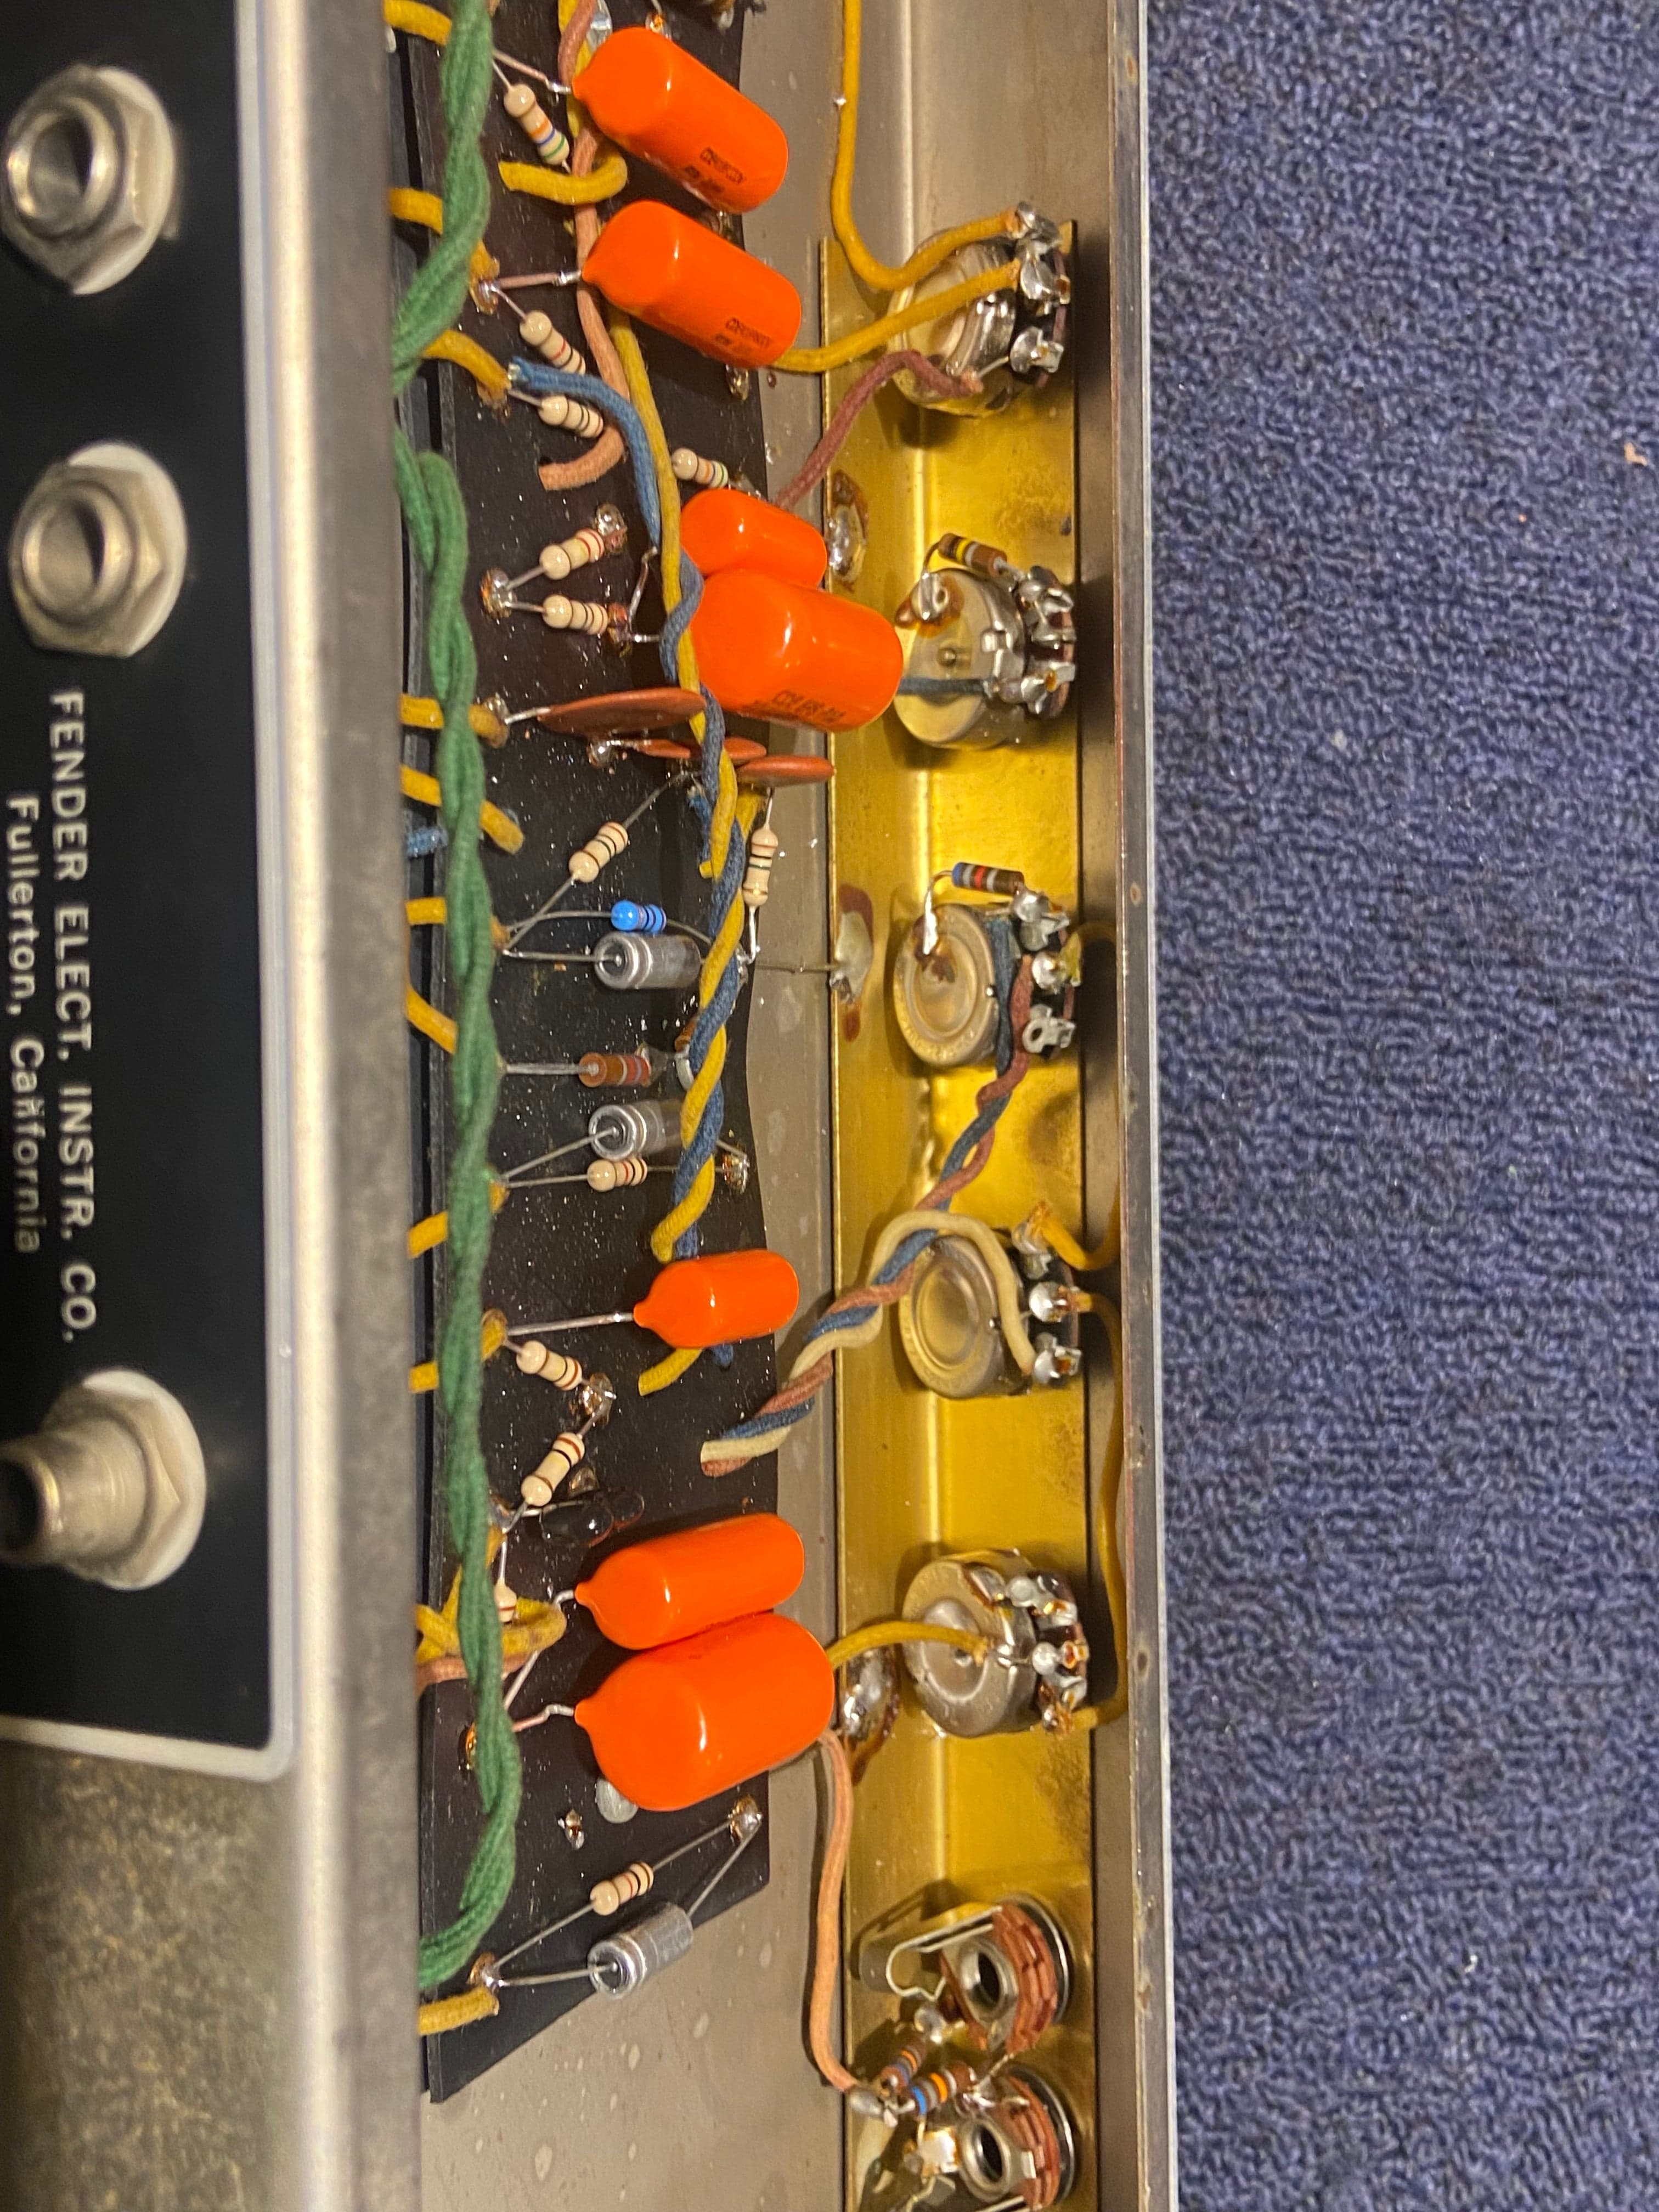 Fender Princeton 15-Watt 1x10